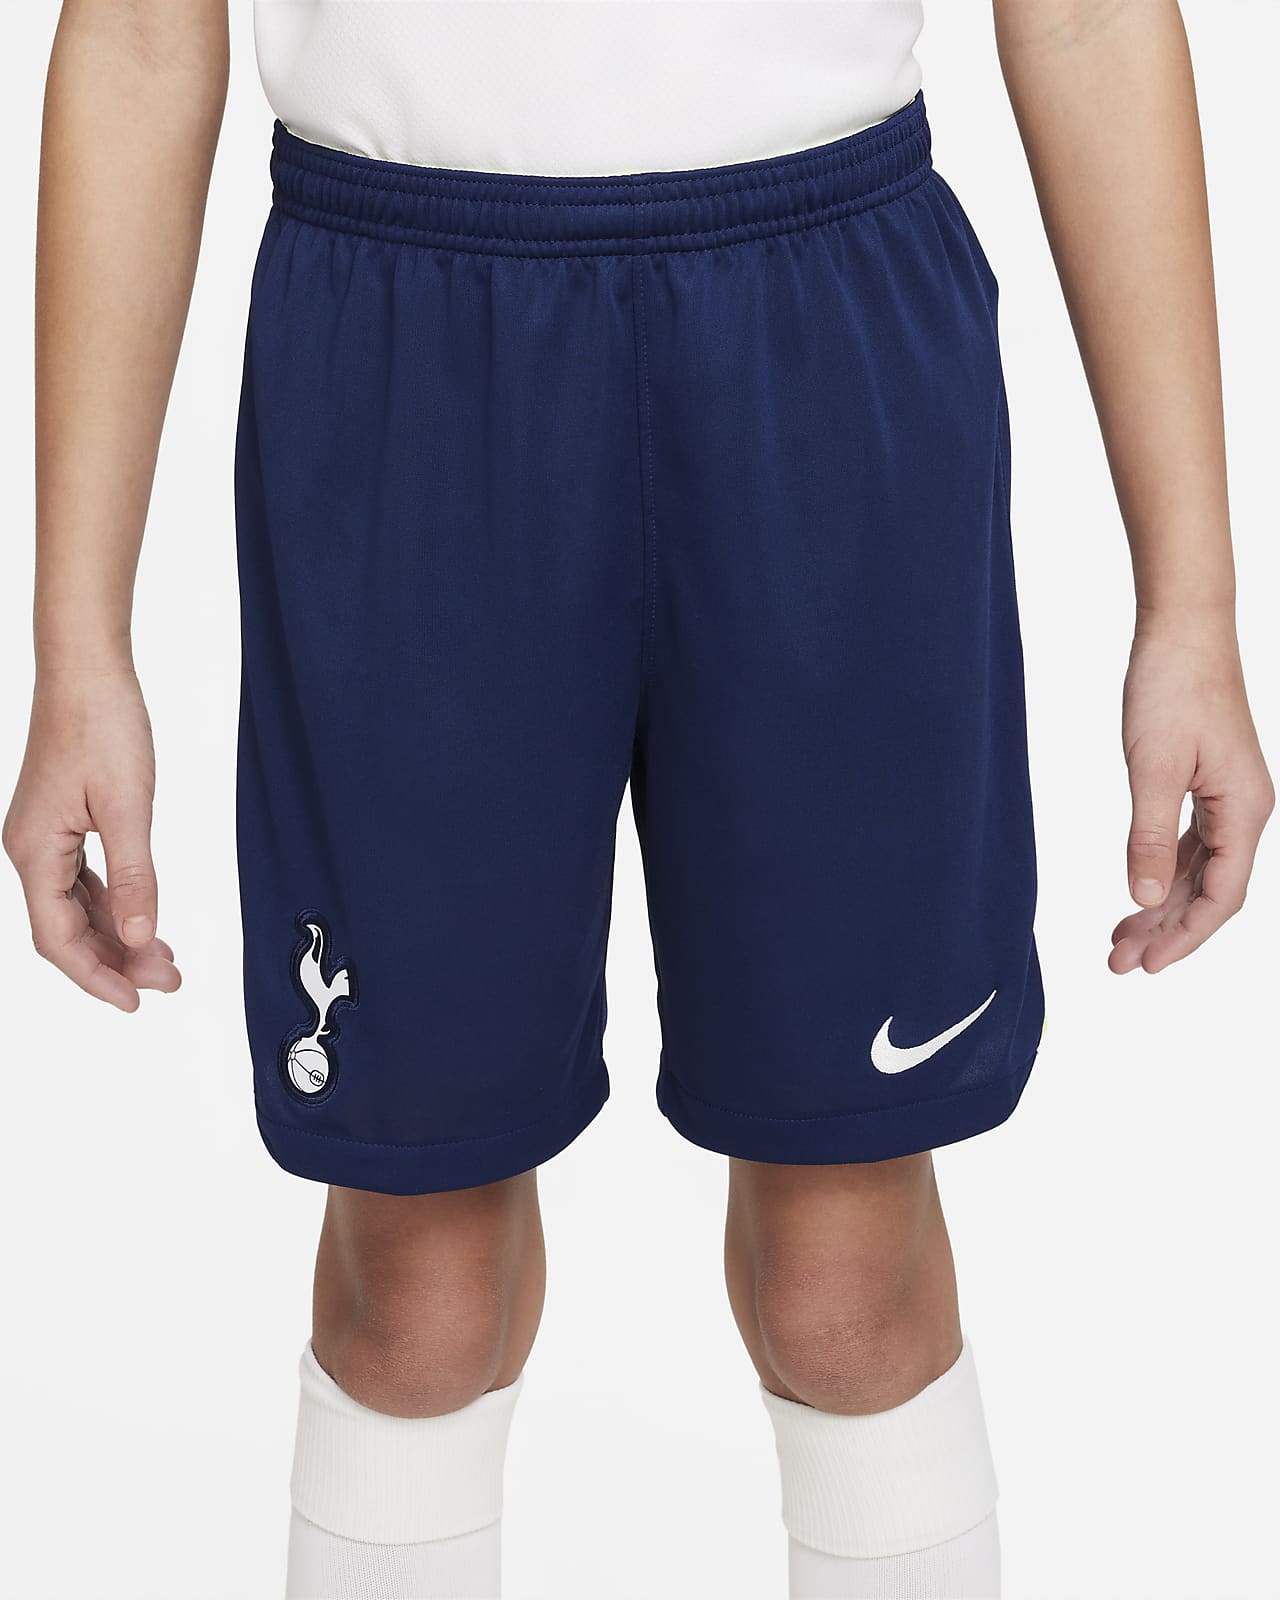 Tottenham Hotspur 2022/23 Stadium Home Men's Nike Dri-FIT Soccer